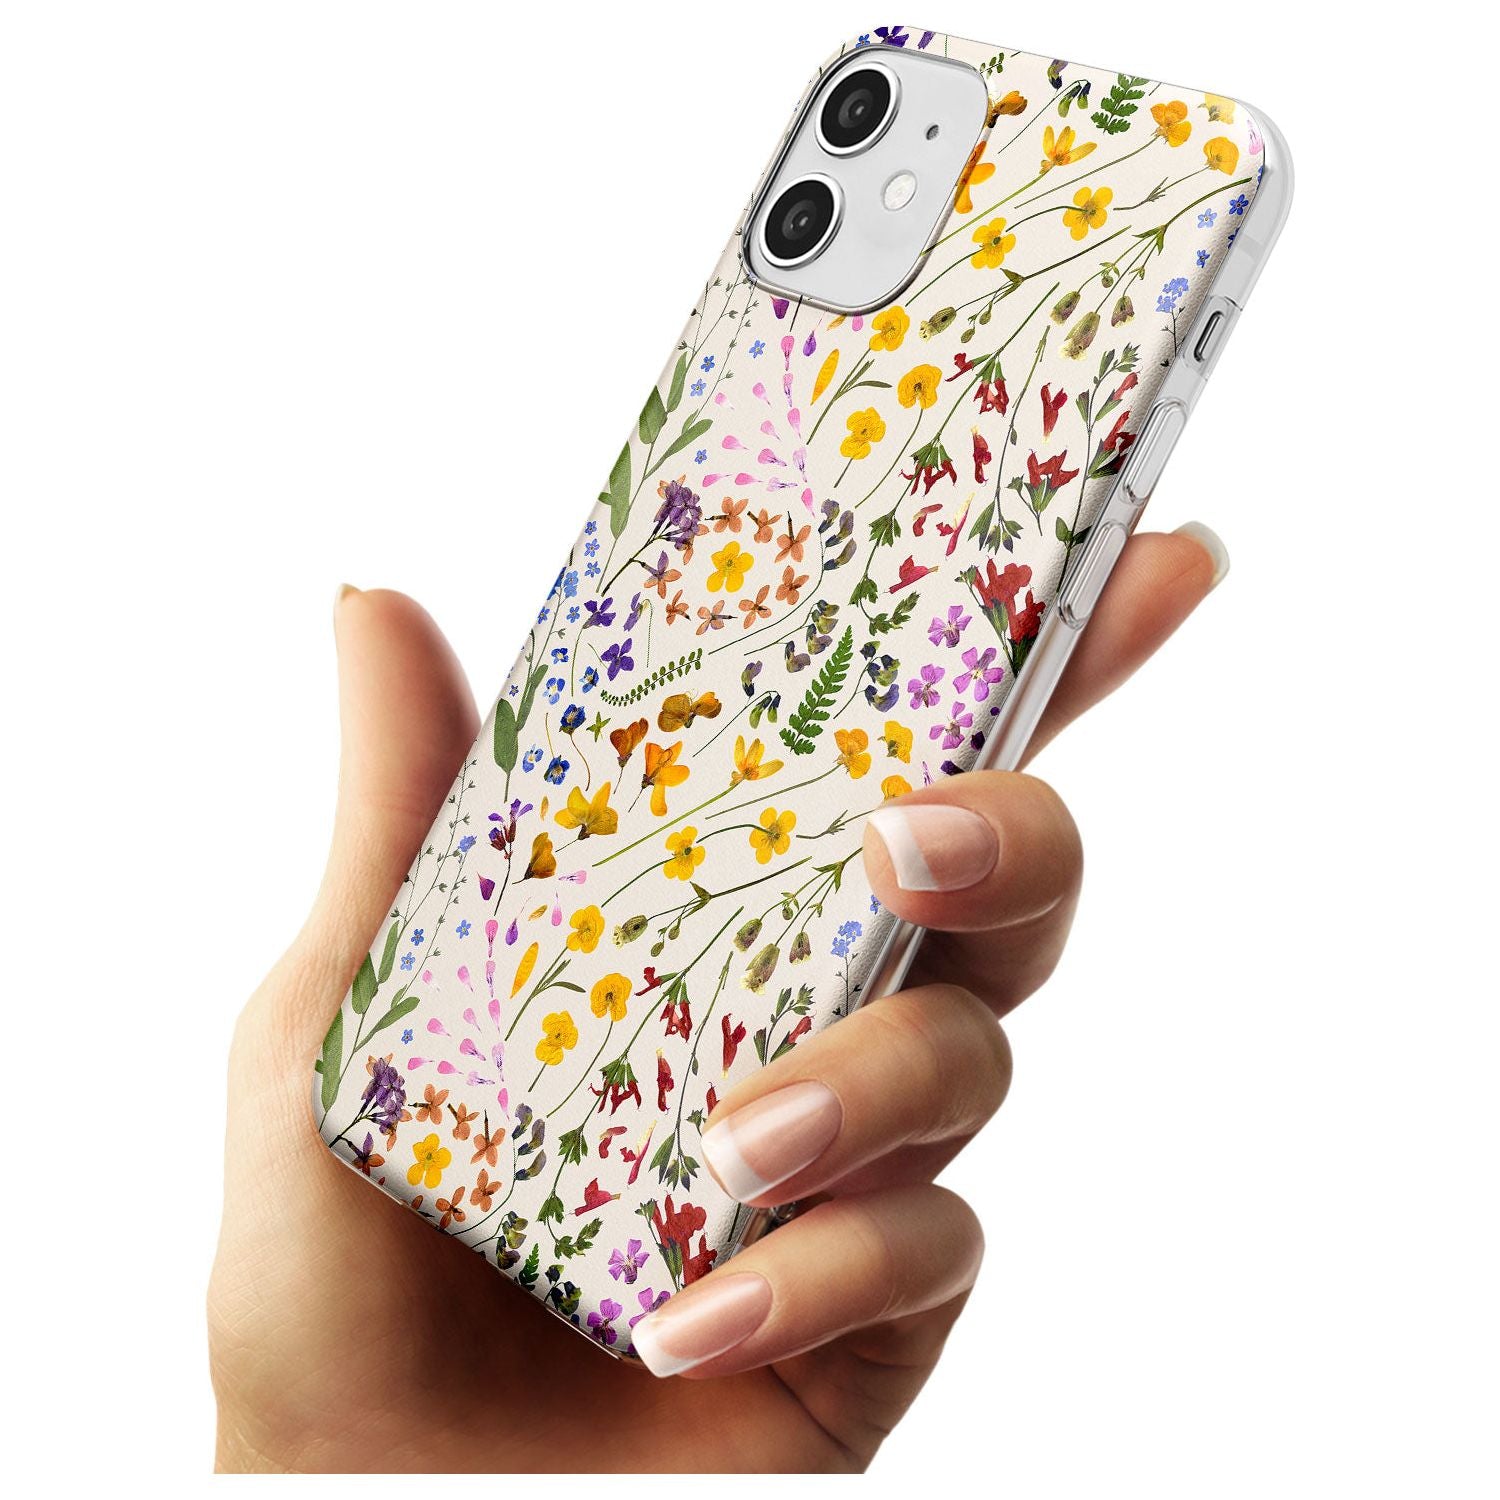 Wildflower & Leaves Cluster Design - Cream Slim TPU Phone Case for iPhone 11